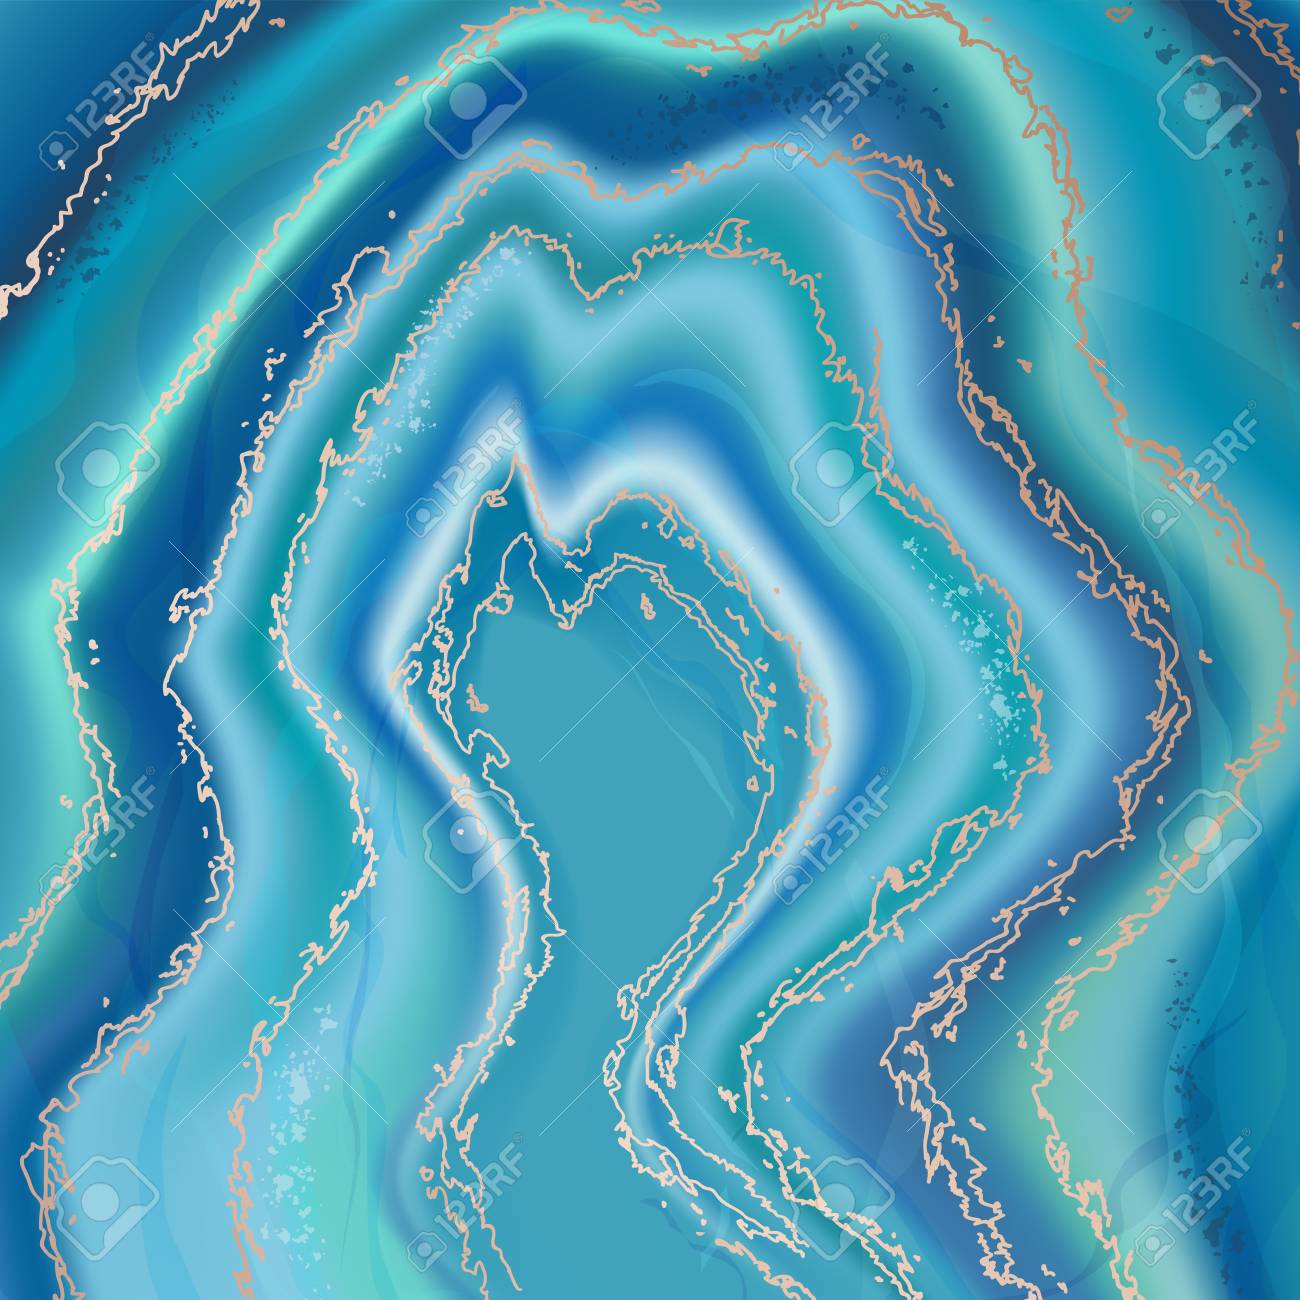 26+] Geode Background - WallpaperSafari